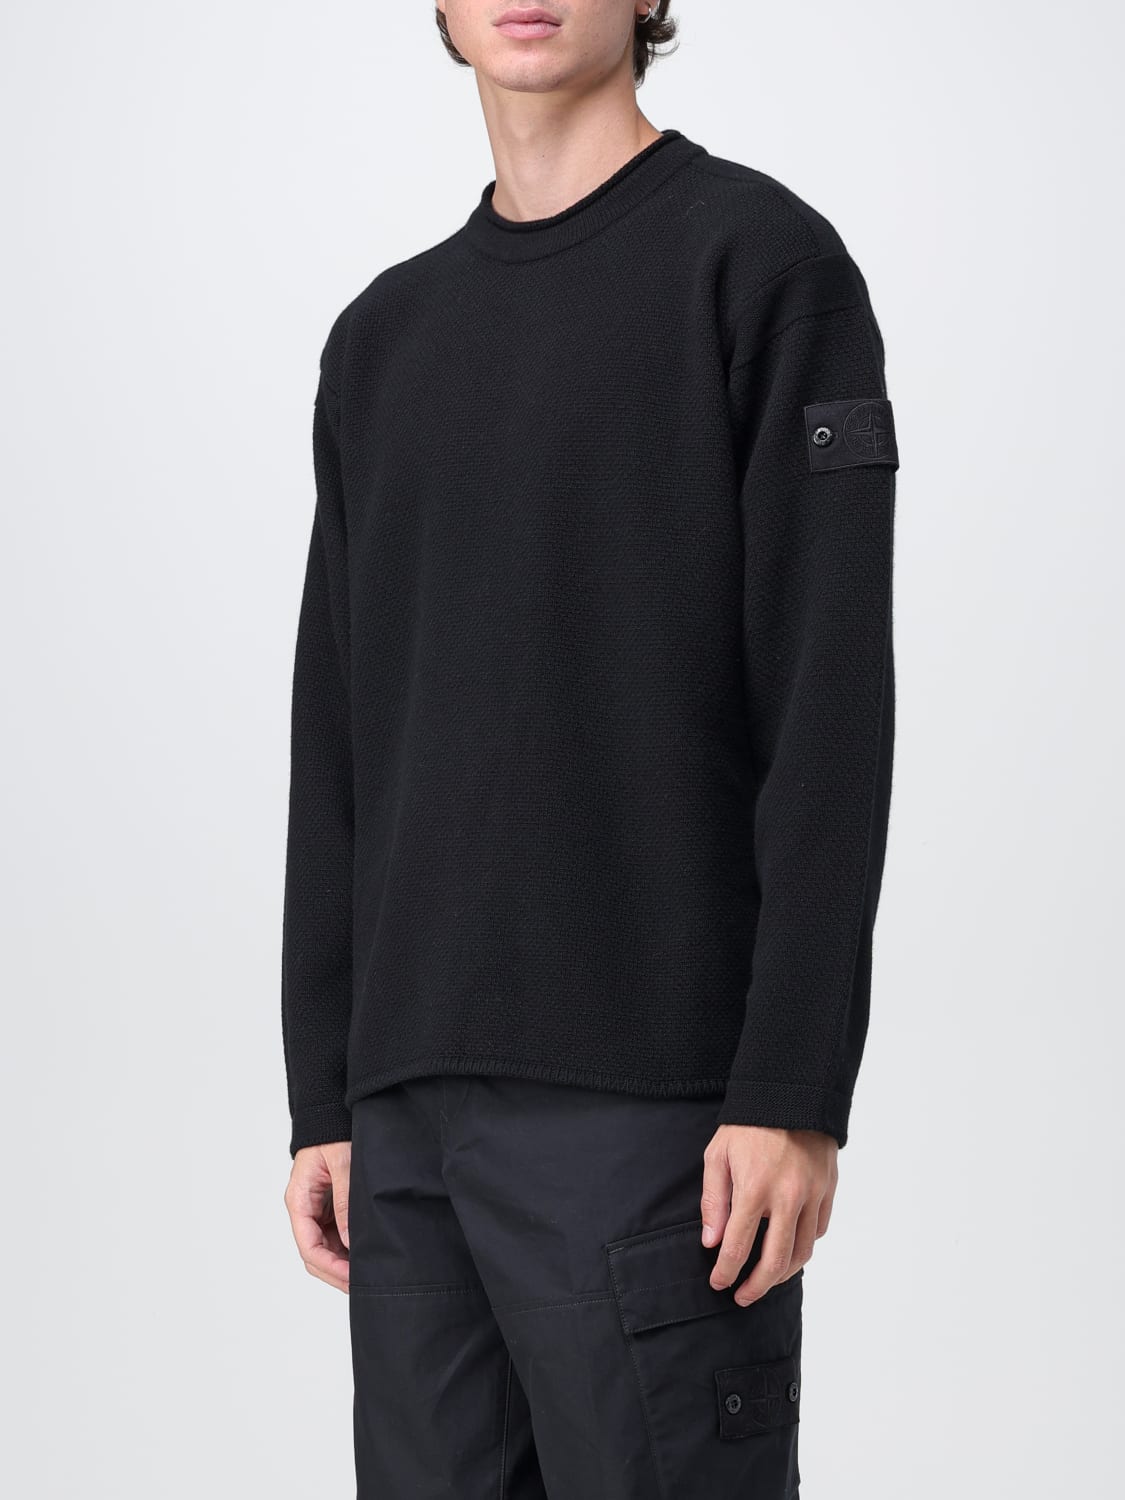 STONE ISLAND: sweater for man - Black | Stone Island sweater 562FA ...